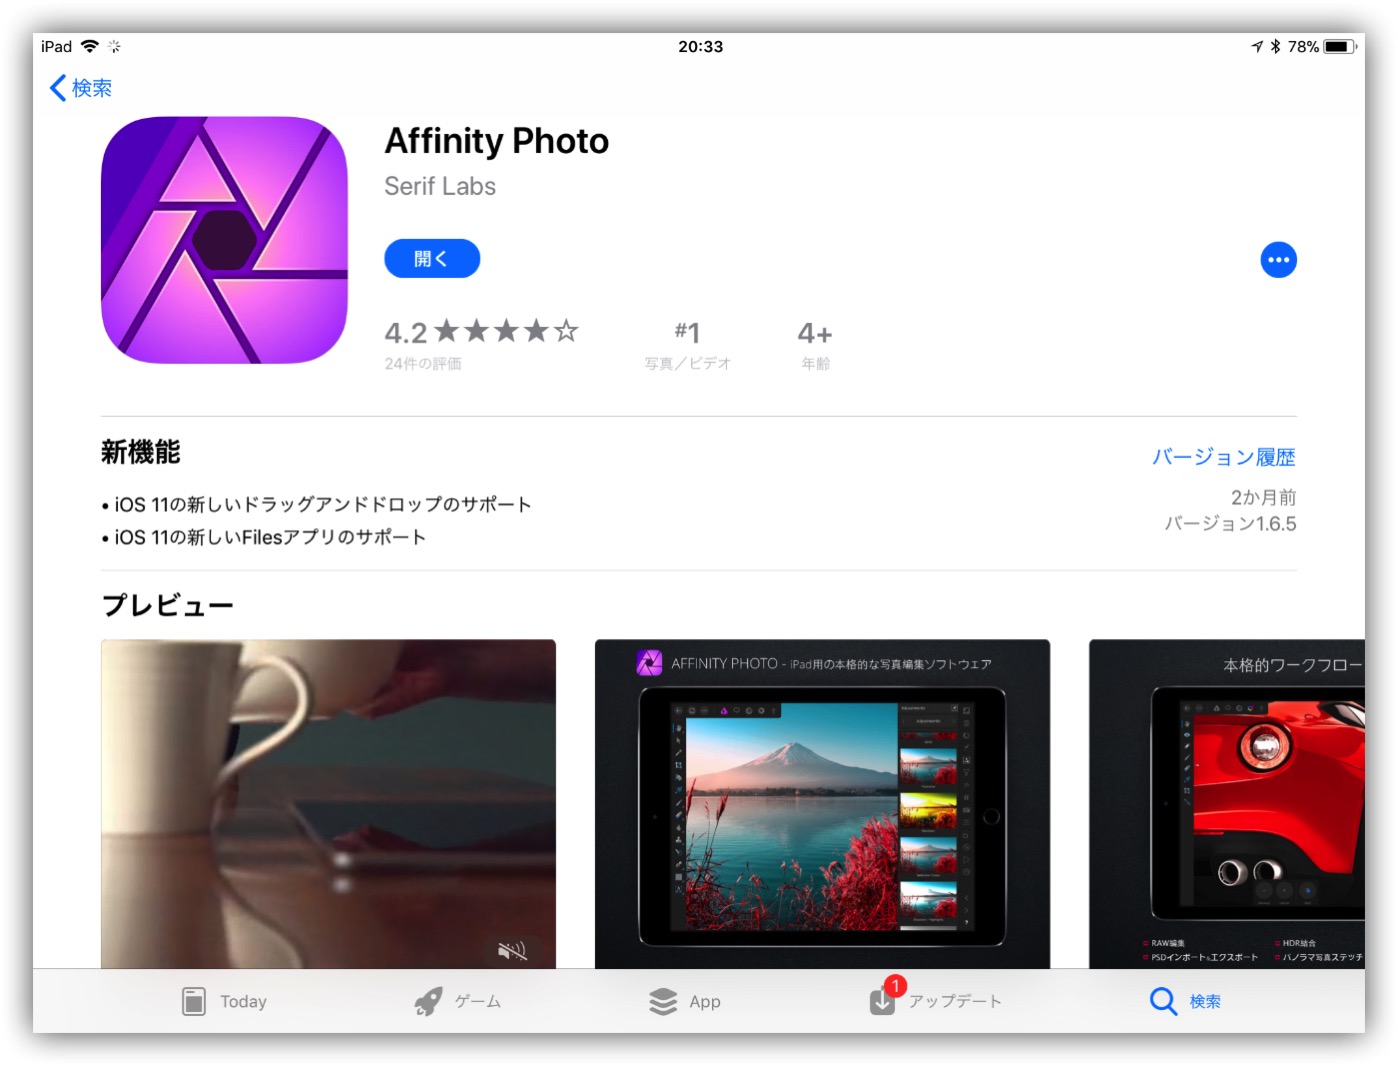 Affinity Photo for iPad-2